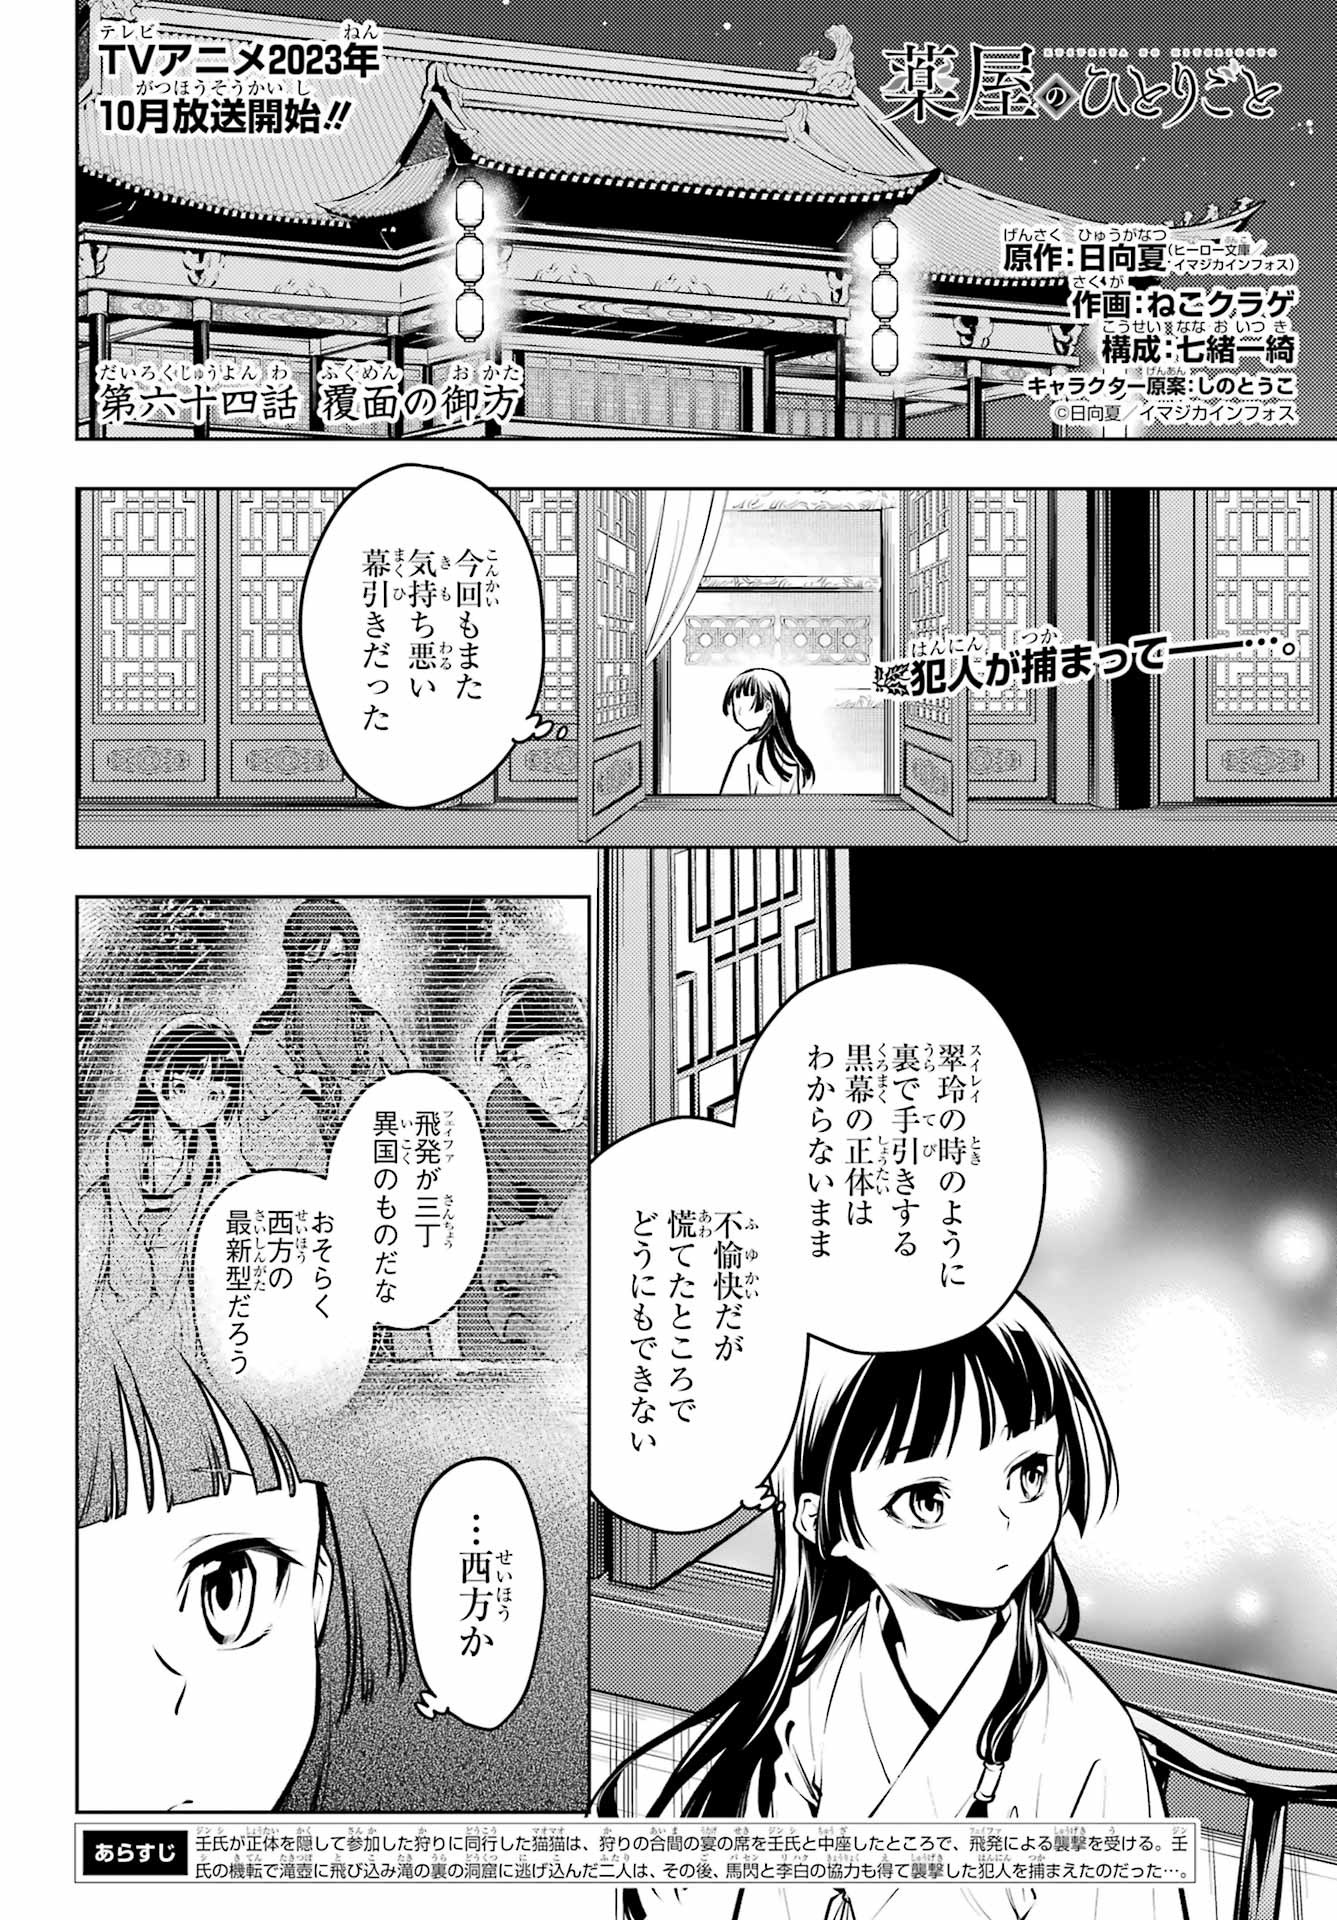 Kusuriya no Hitorigoto - Chapter 64 - Page 1